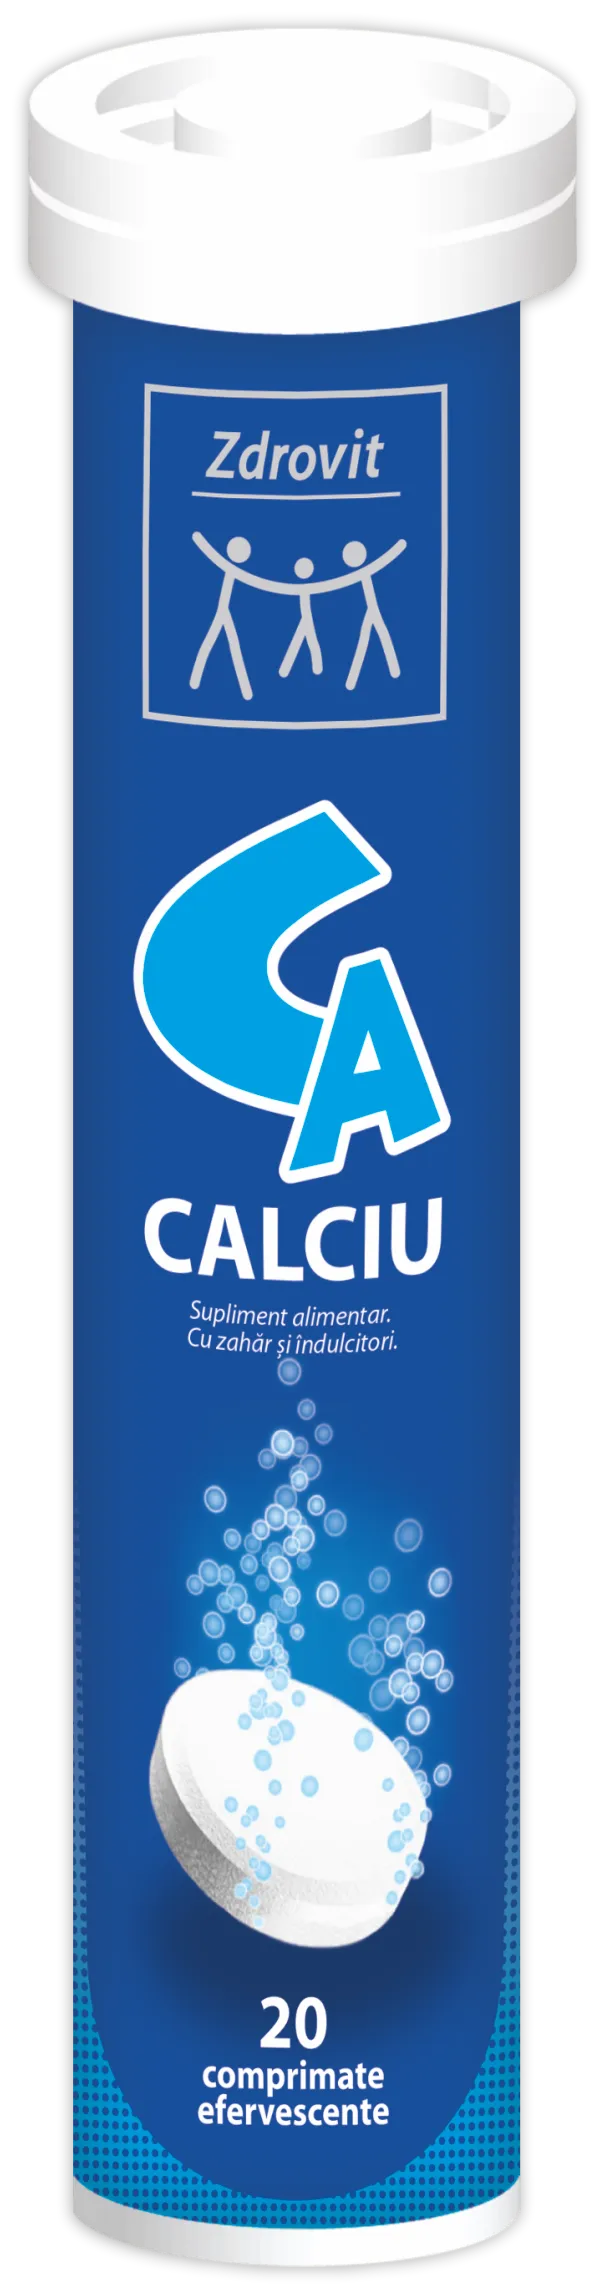 Zdrovit Calciu 20 comprimate efervescente